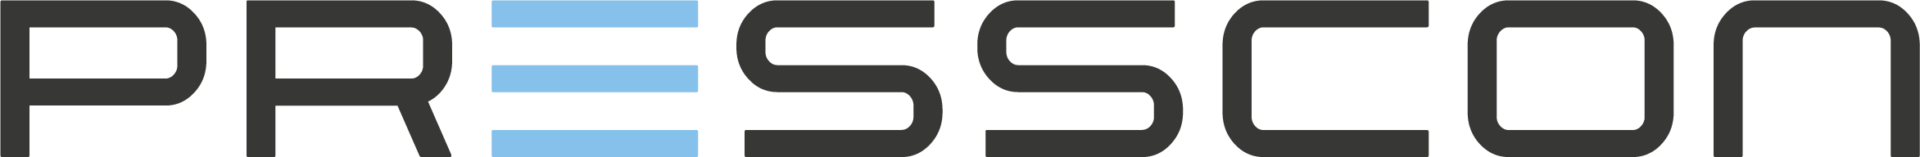 Logo-Presscon